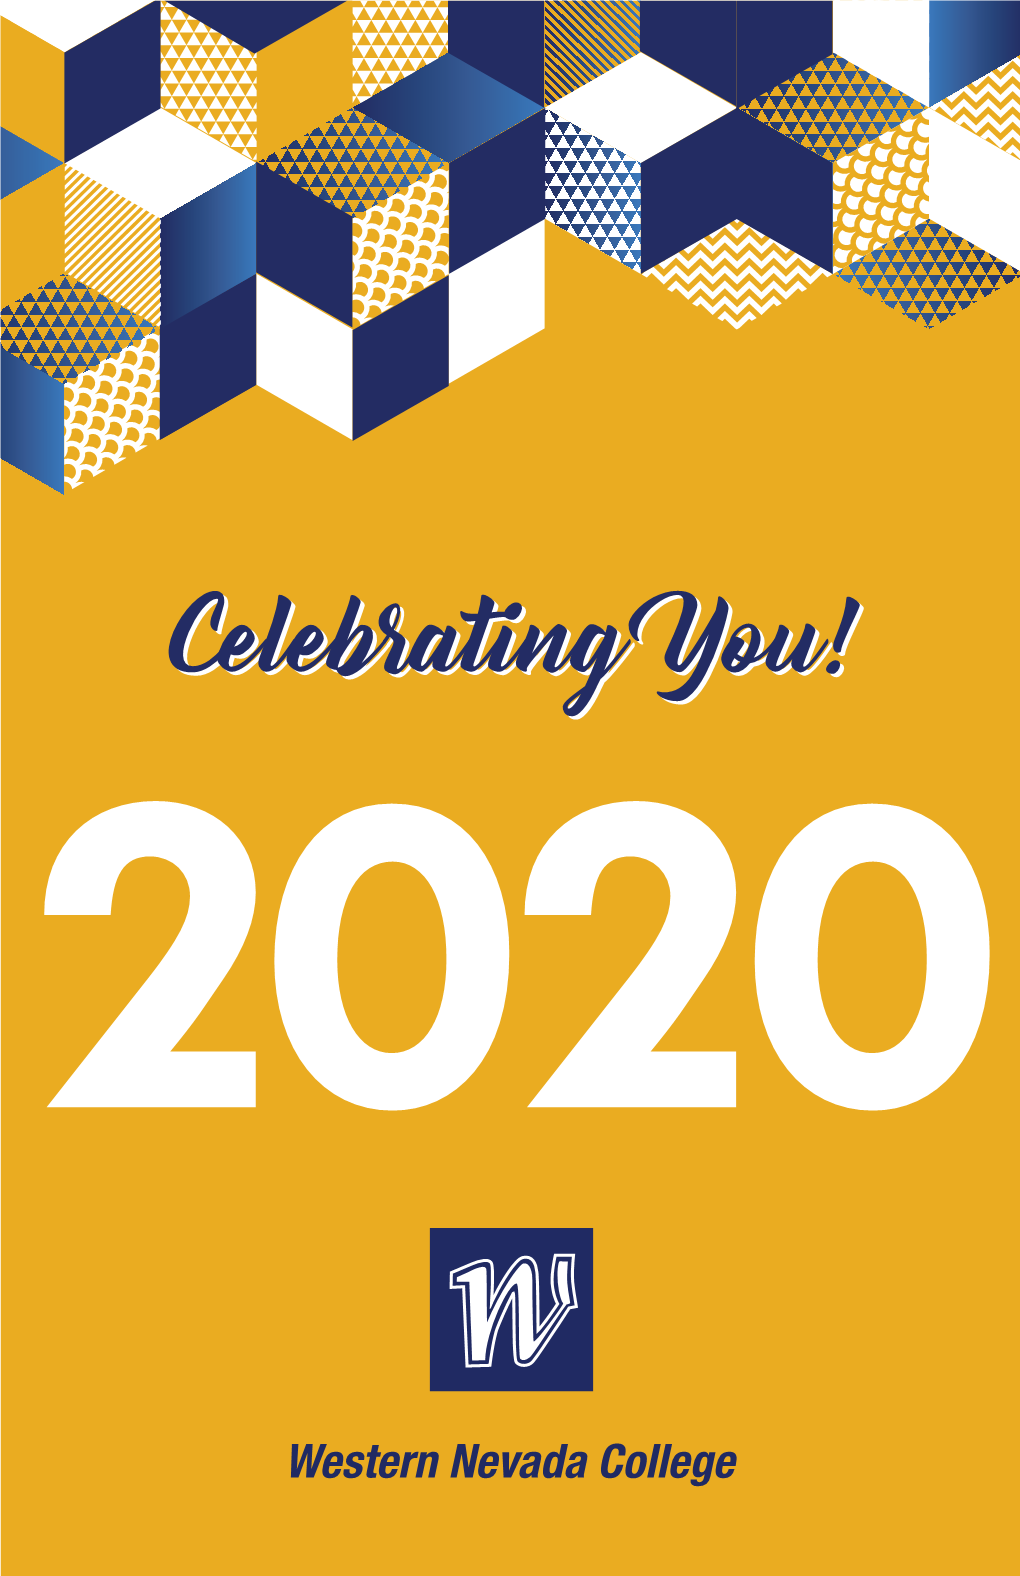 View the 2020 Commencement Program